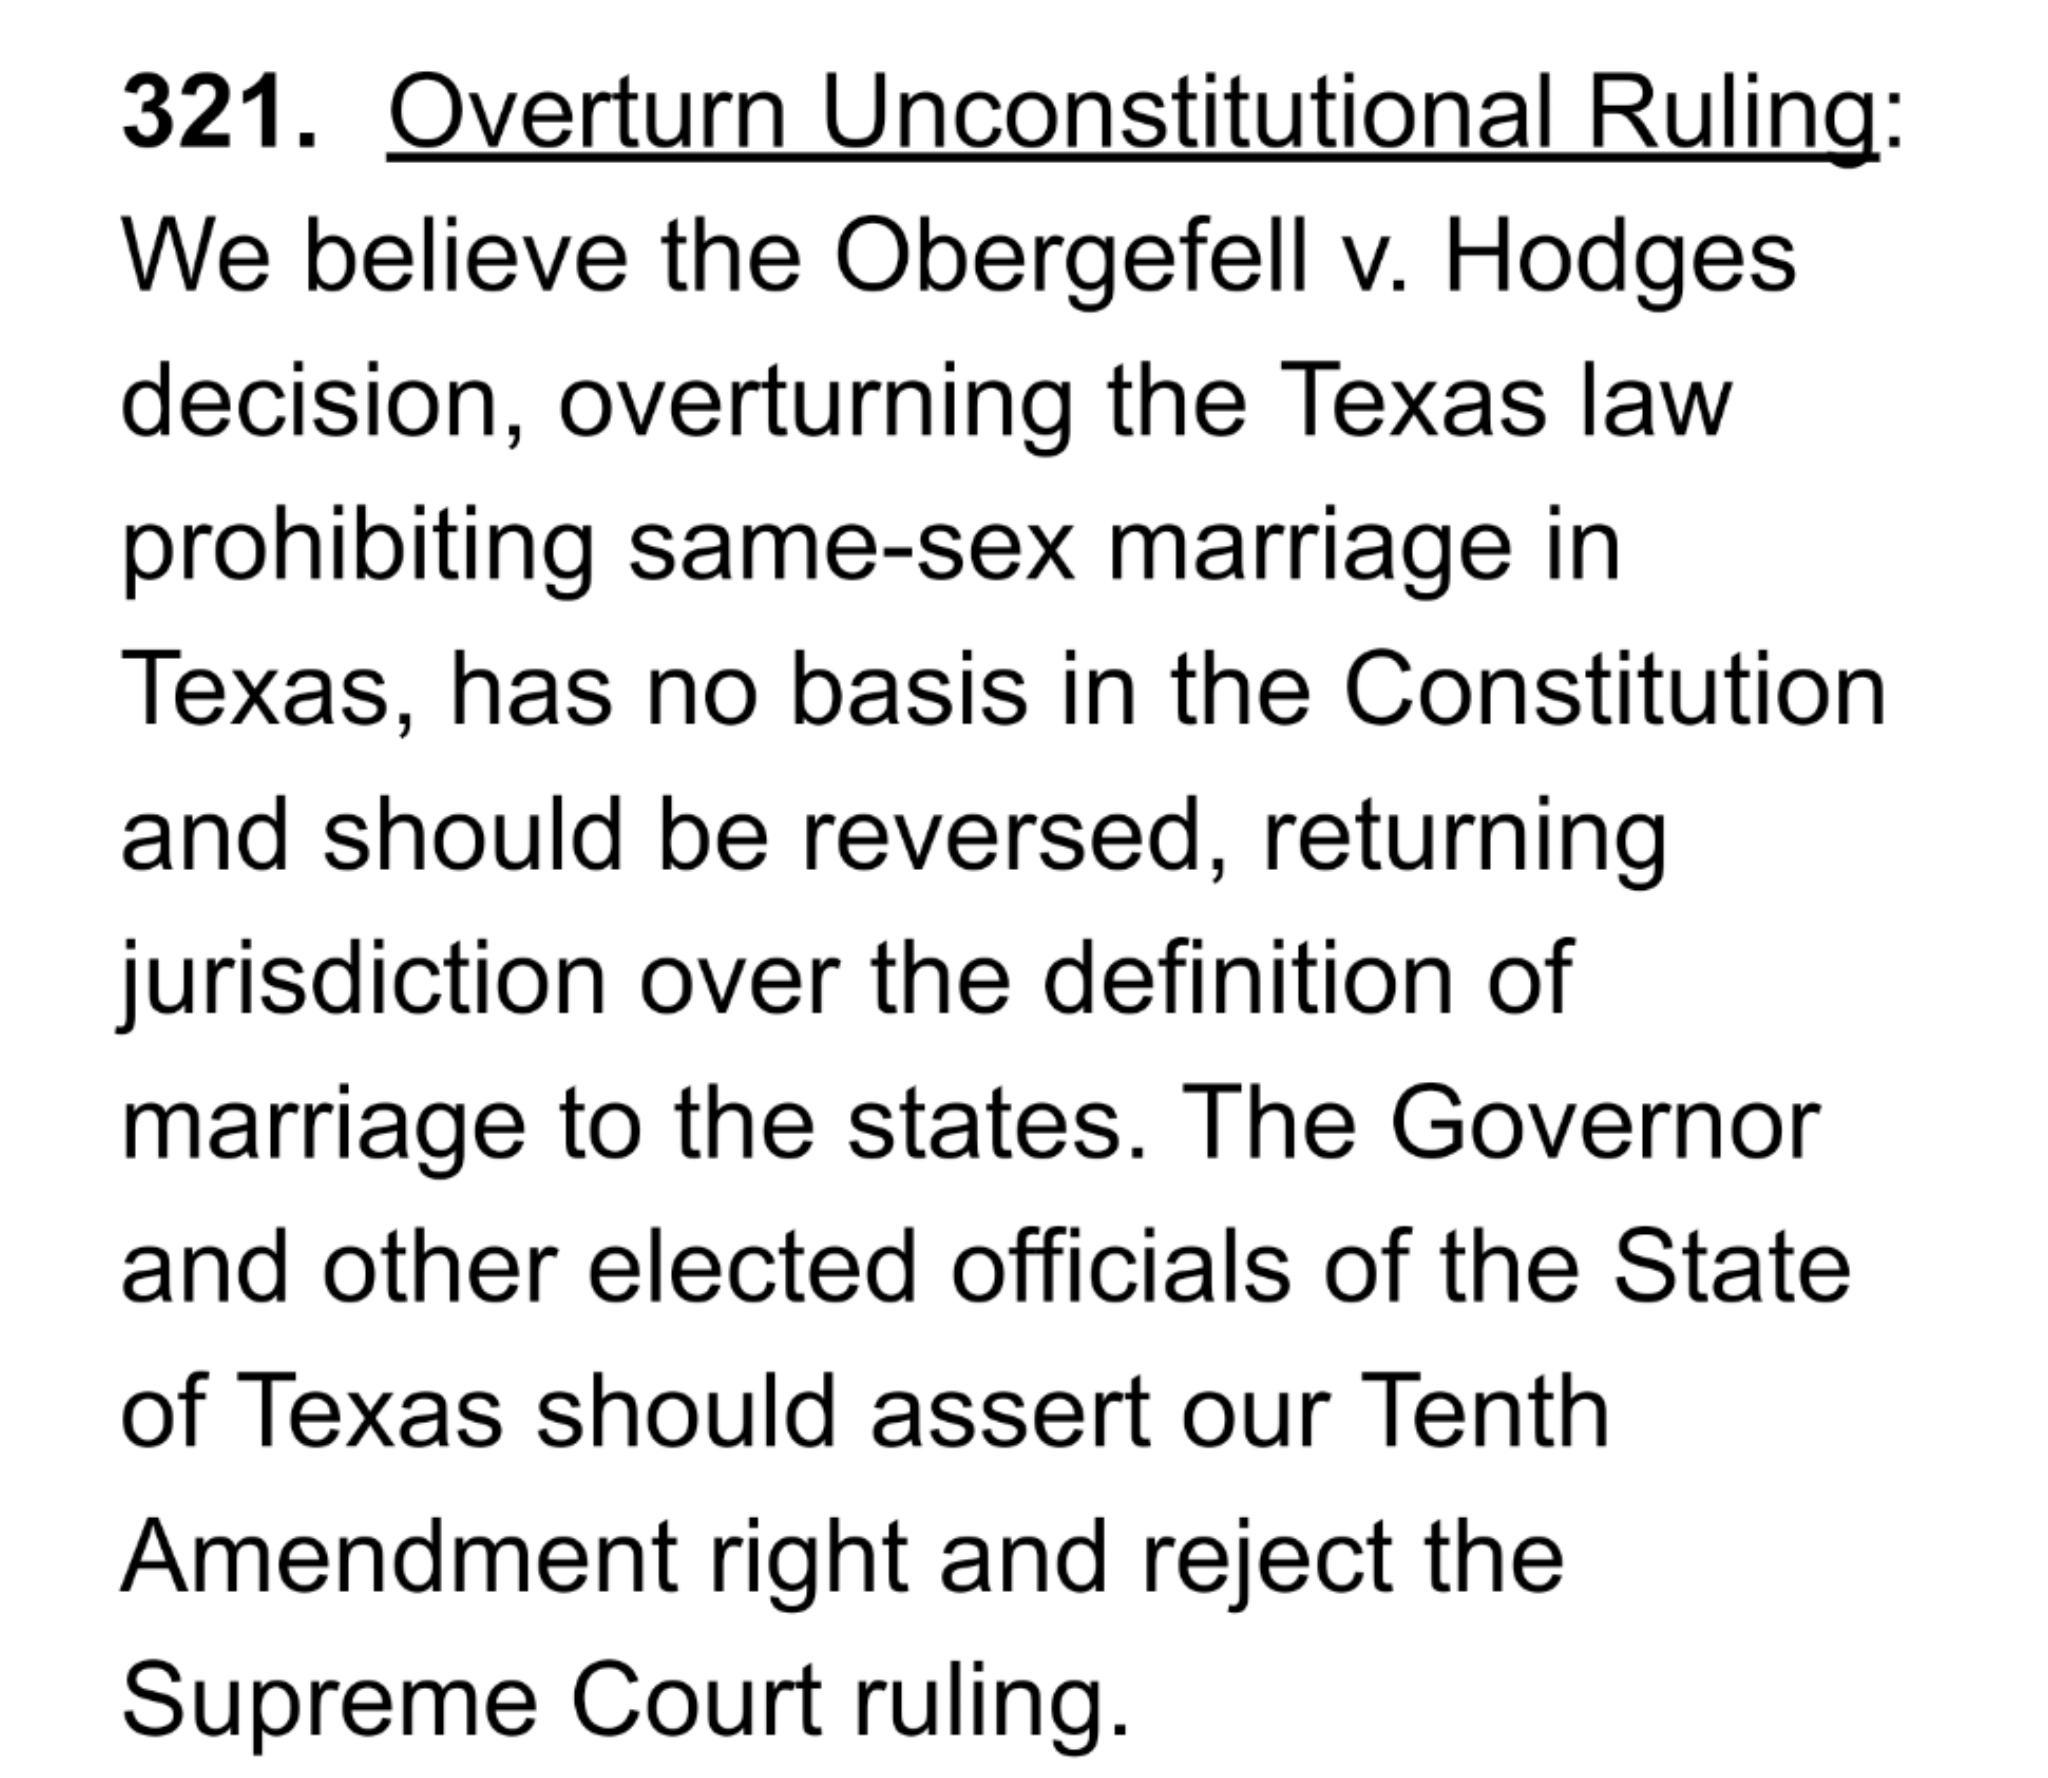 Texas GOP platform is anti-gay